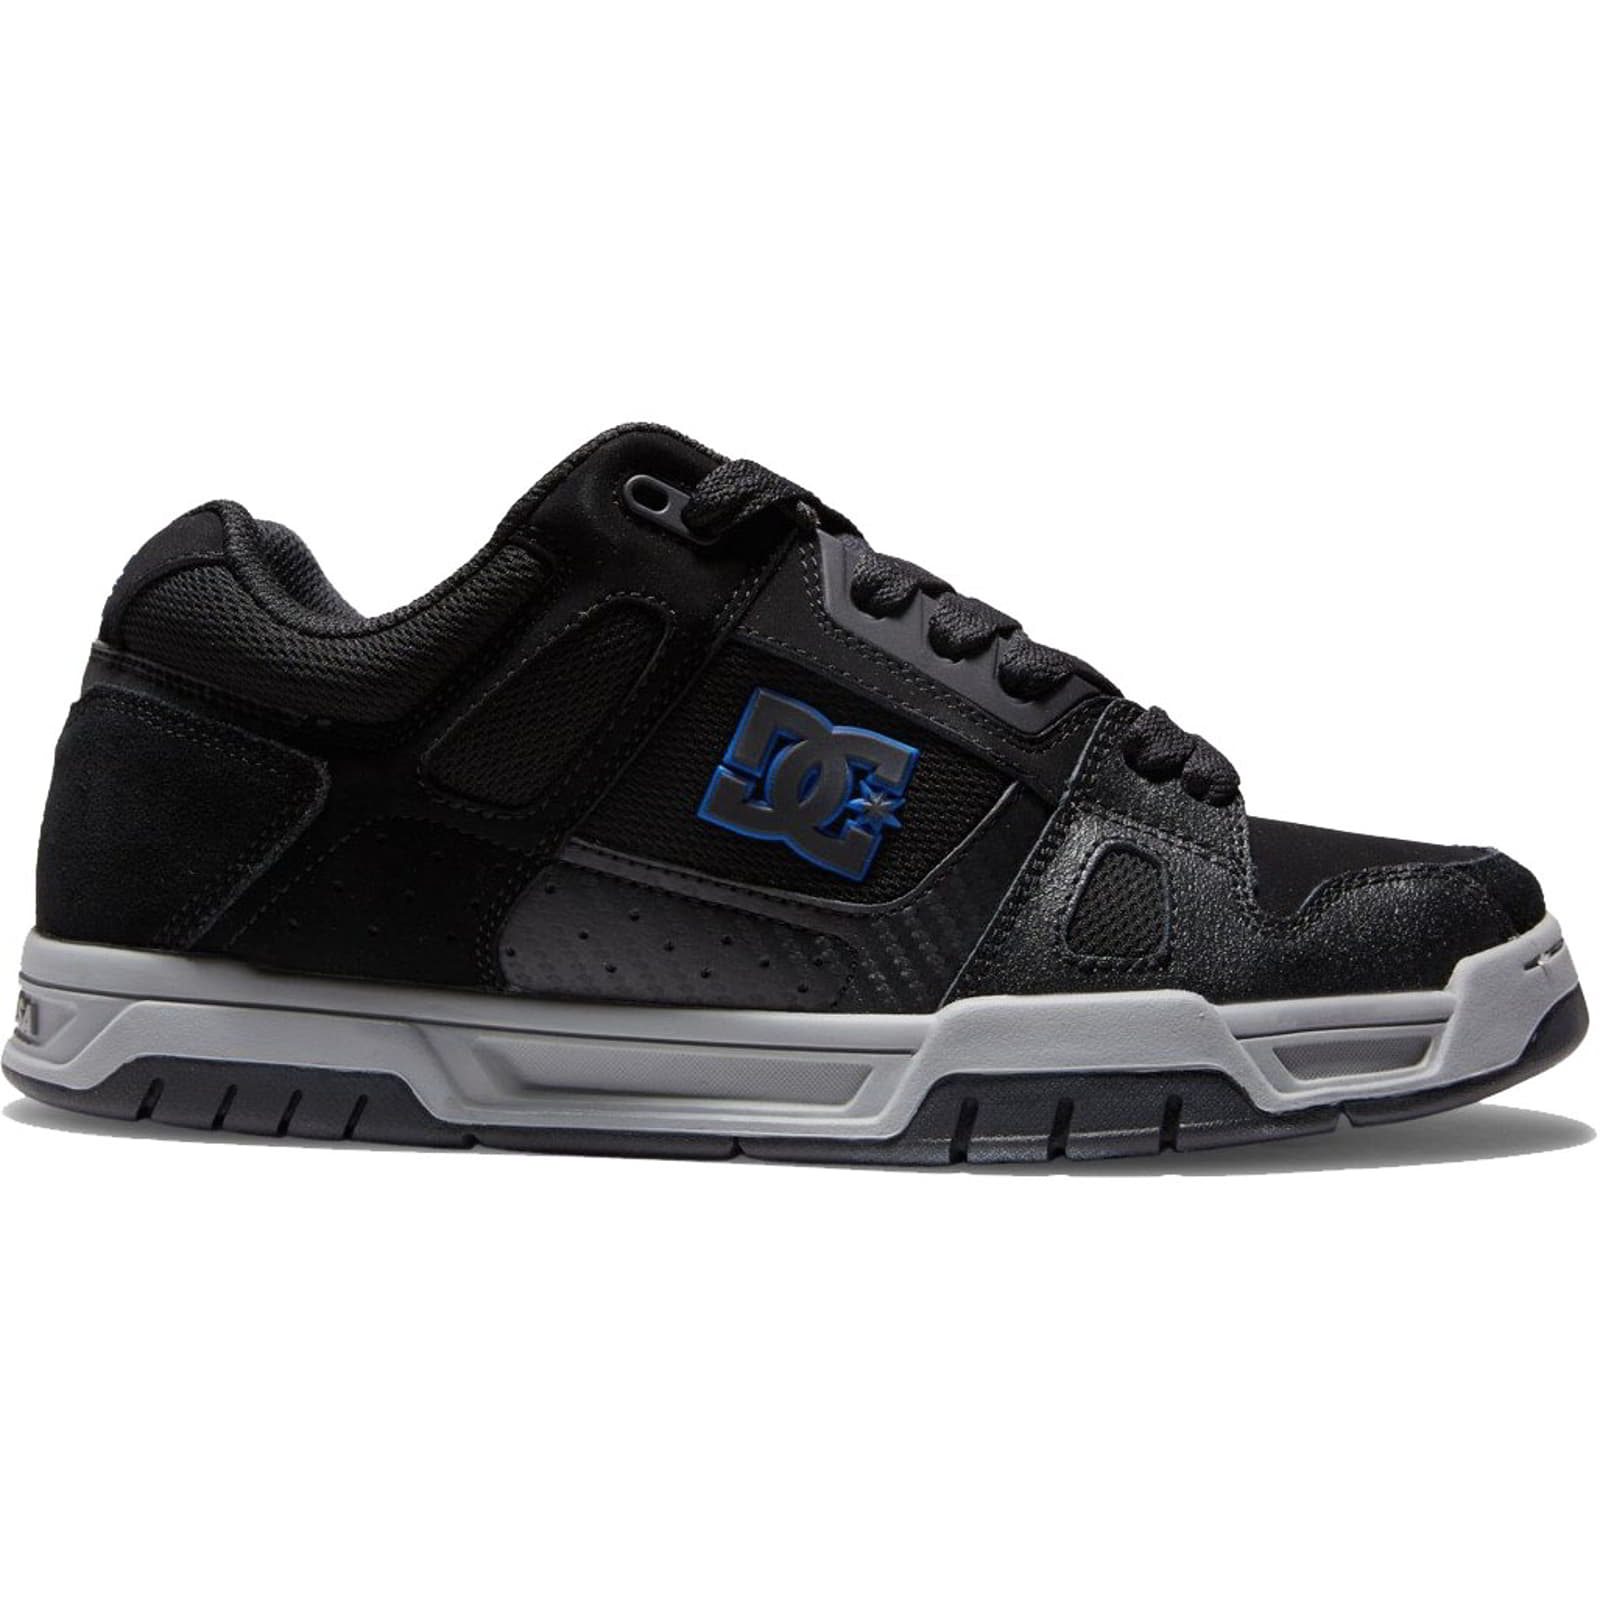 DC Mens Stag Skate Shoes - Black Grey Blue 2951